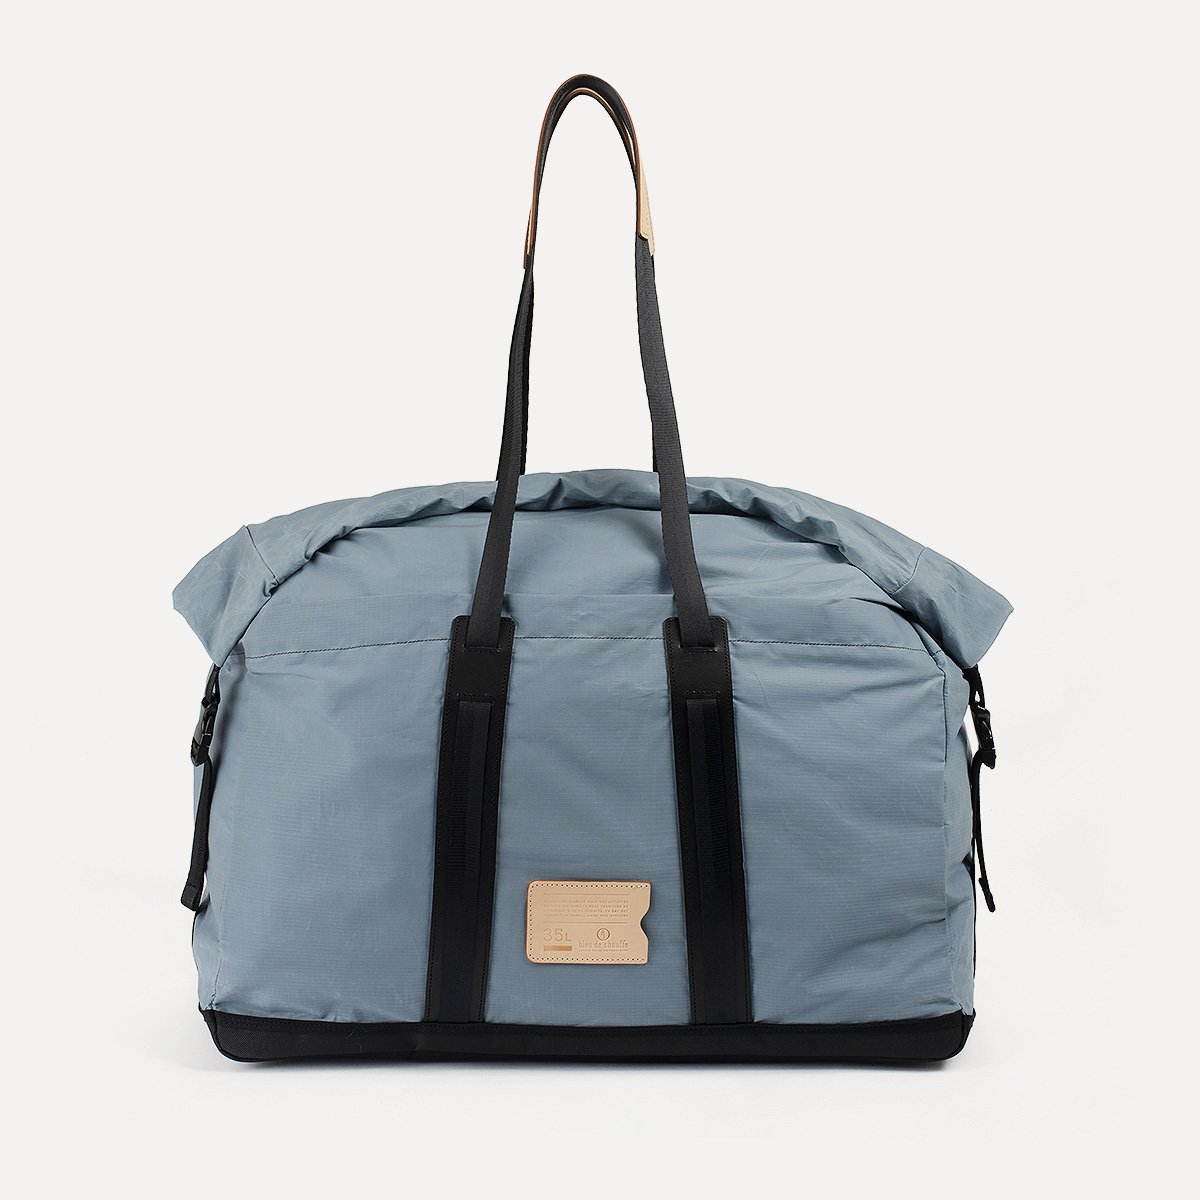 35L Baroud Travel bag - Blue Grey (image n°1)